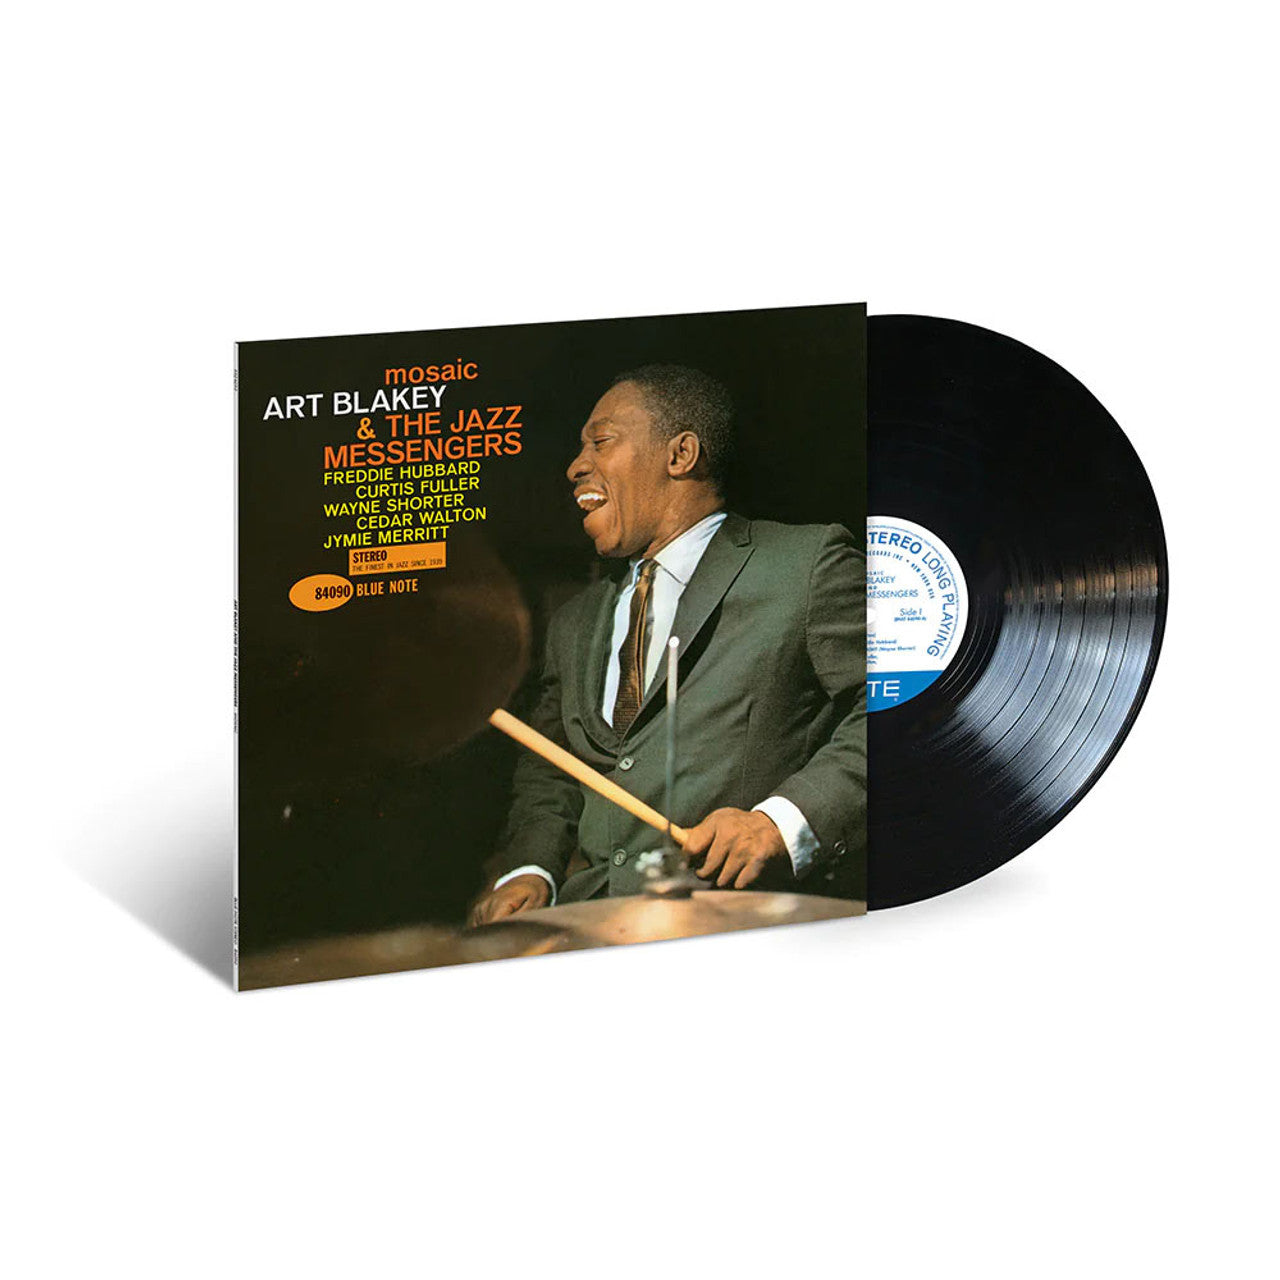 Order Art Blakey & the Jazz Messengers - Mosaic (Blue Note Classic Vinyl Series, 180 Gram Vinyl)